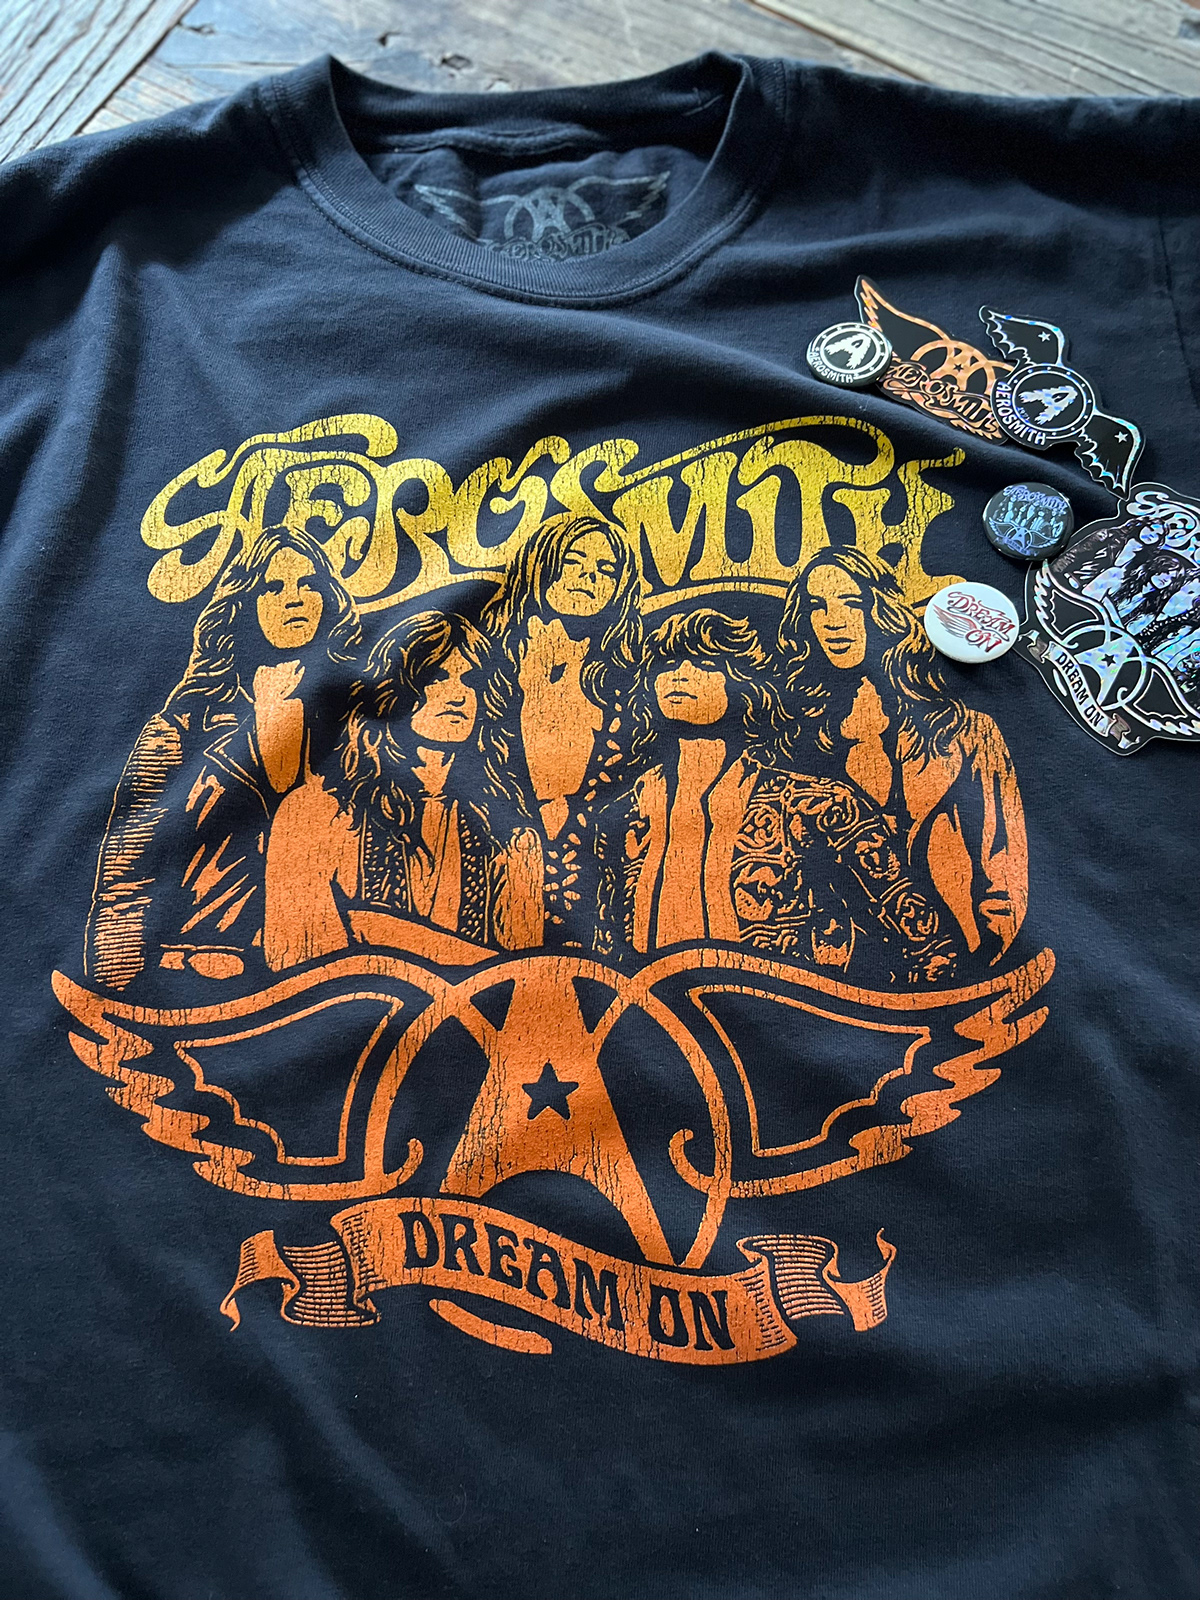 Aerosmith Aerosmith t-shirt band merch band t-shirt band tee concert merchandise Concert T-shirt Dream On rock t-shirt rockswell